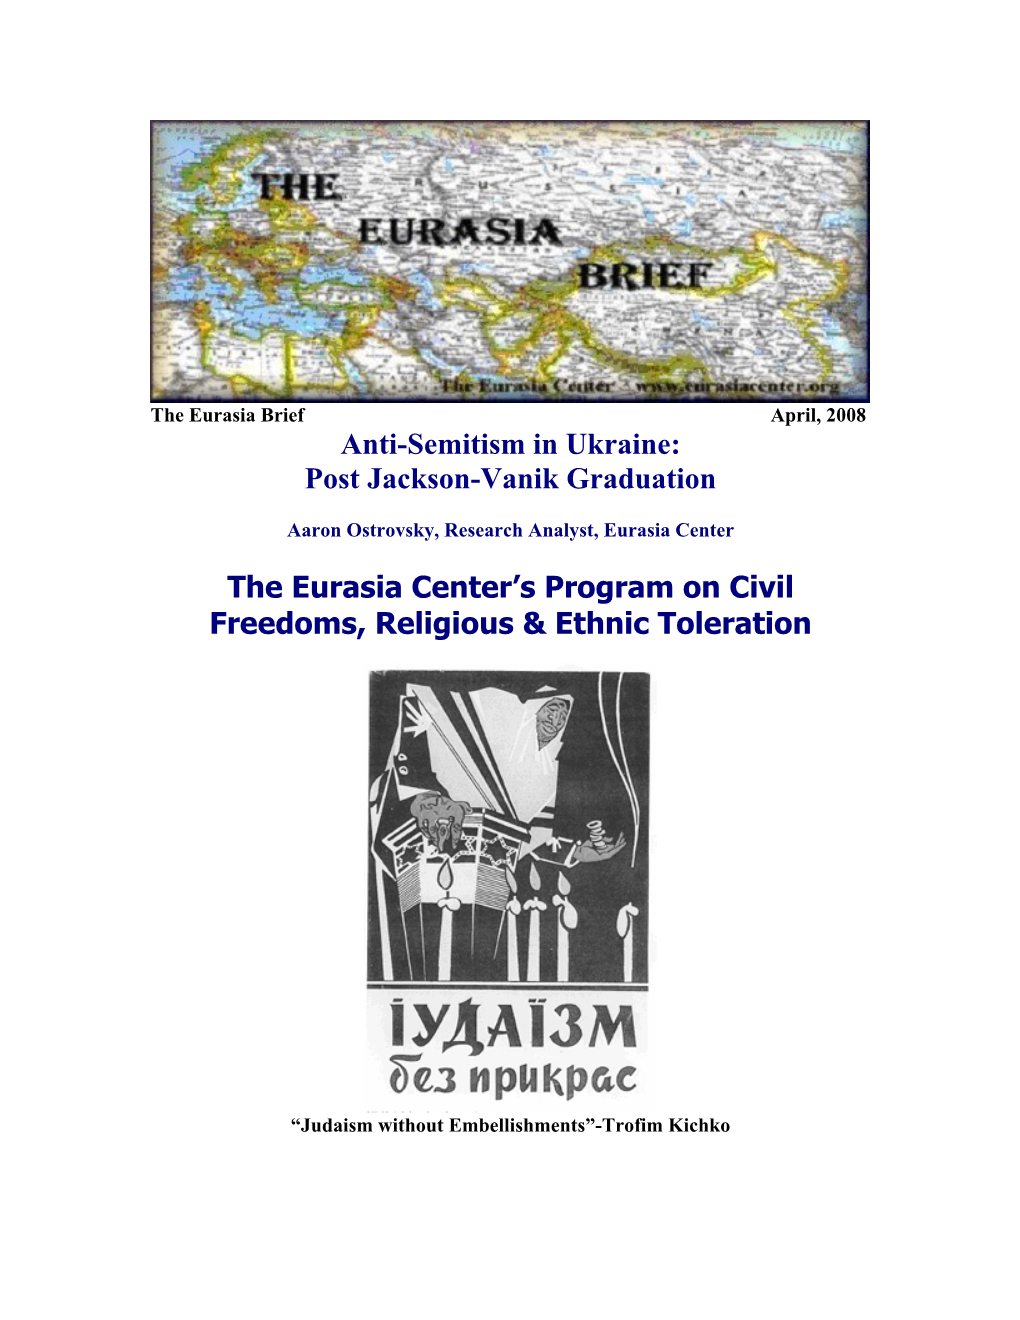 Anti-Semitism in Ukraine: Post Jackson-Vanik Graduation The